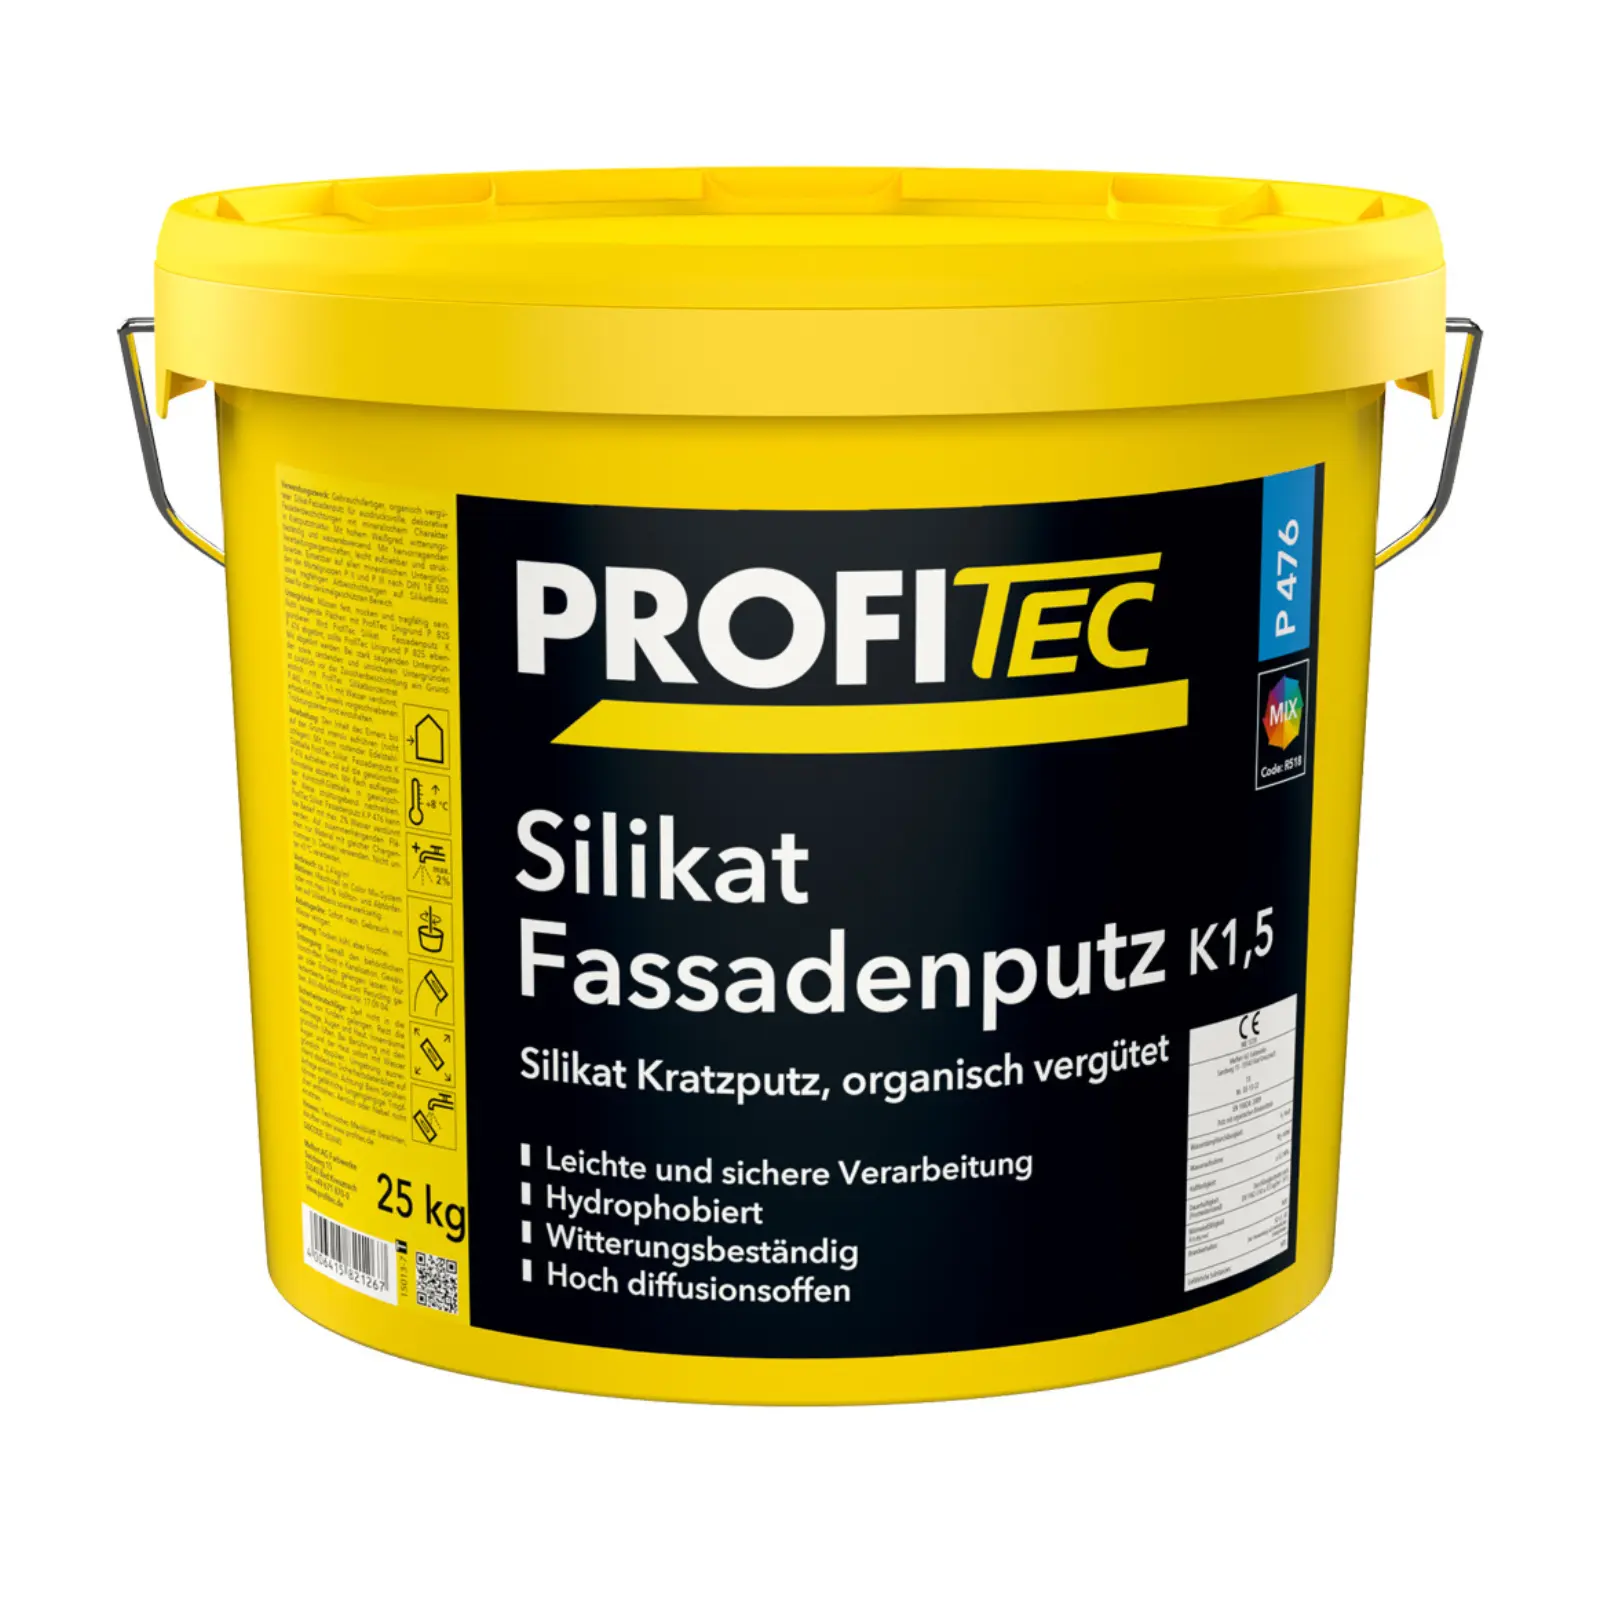 ProfiTec Silikat-Fassadenputz K 20, P476, weiss, 25kg